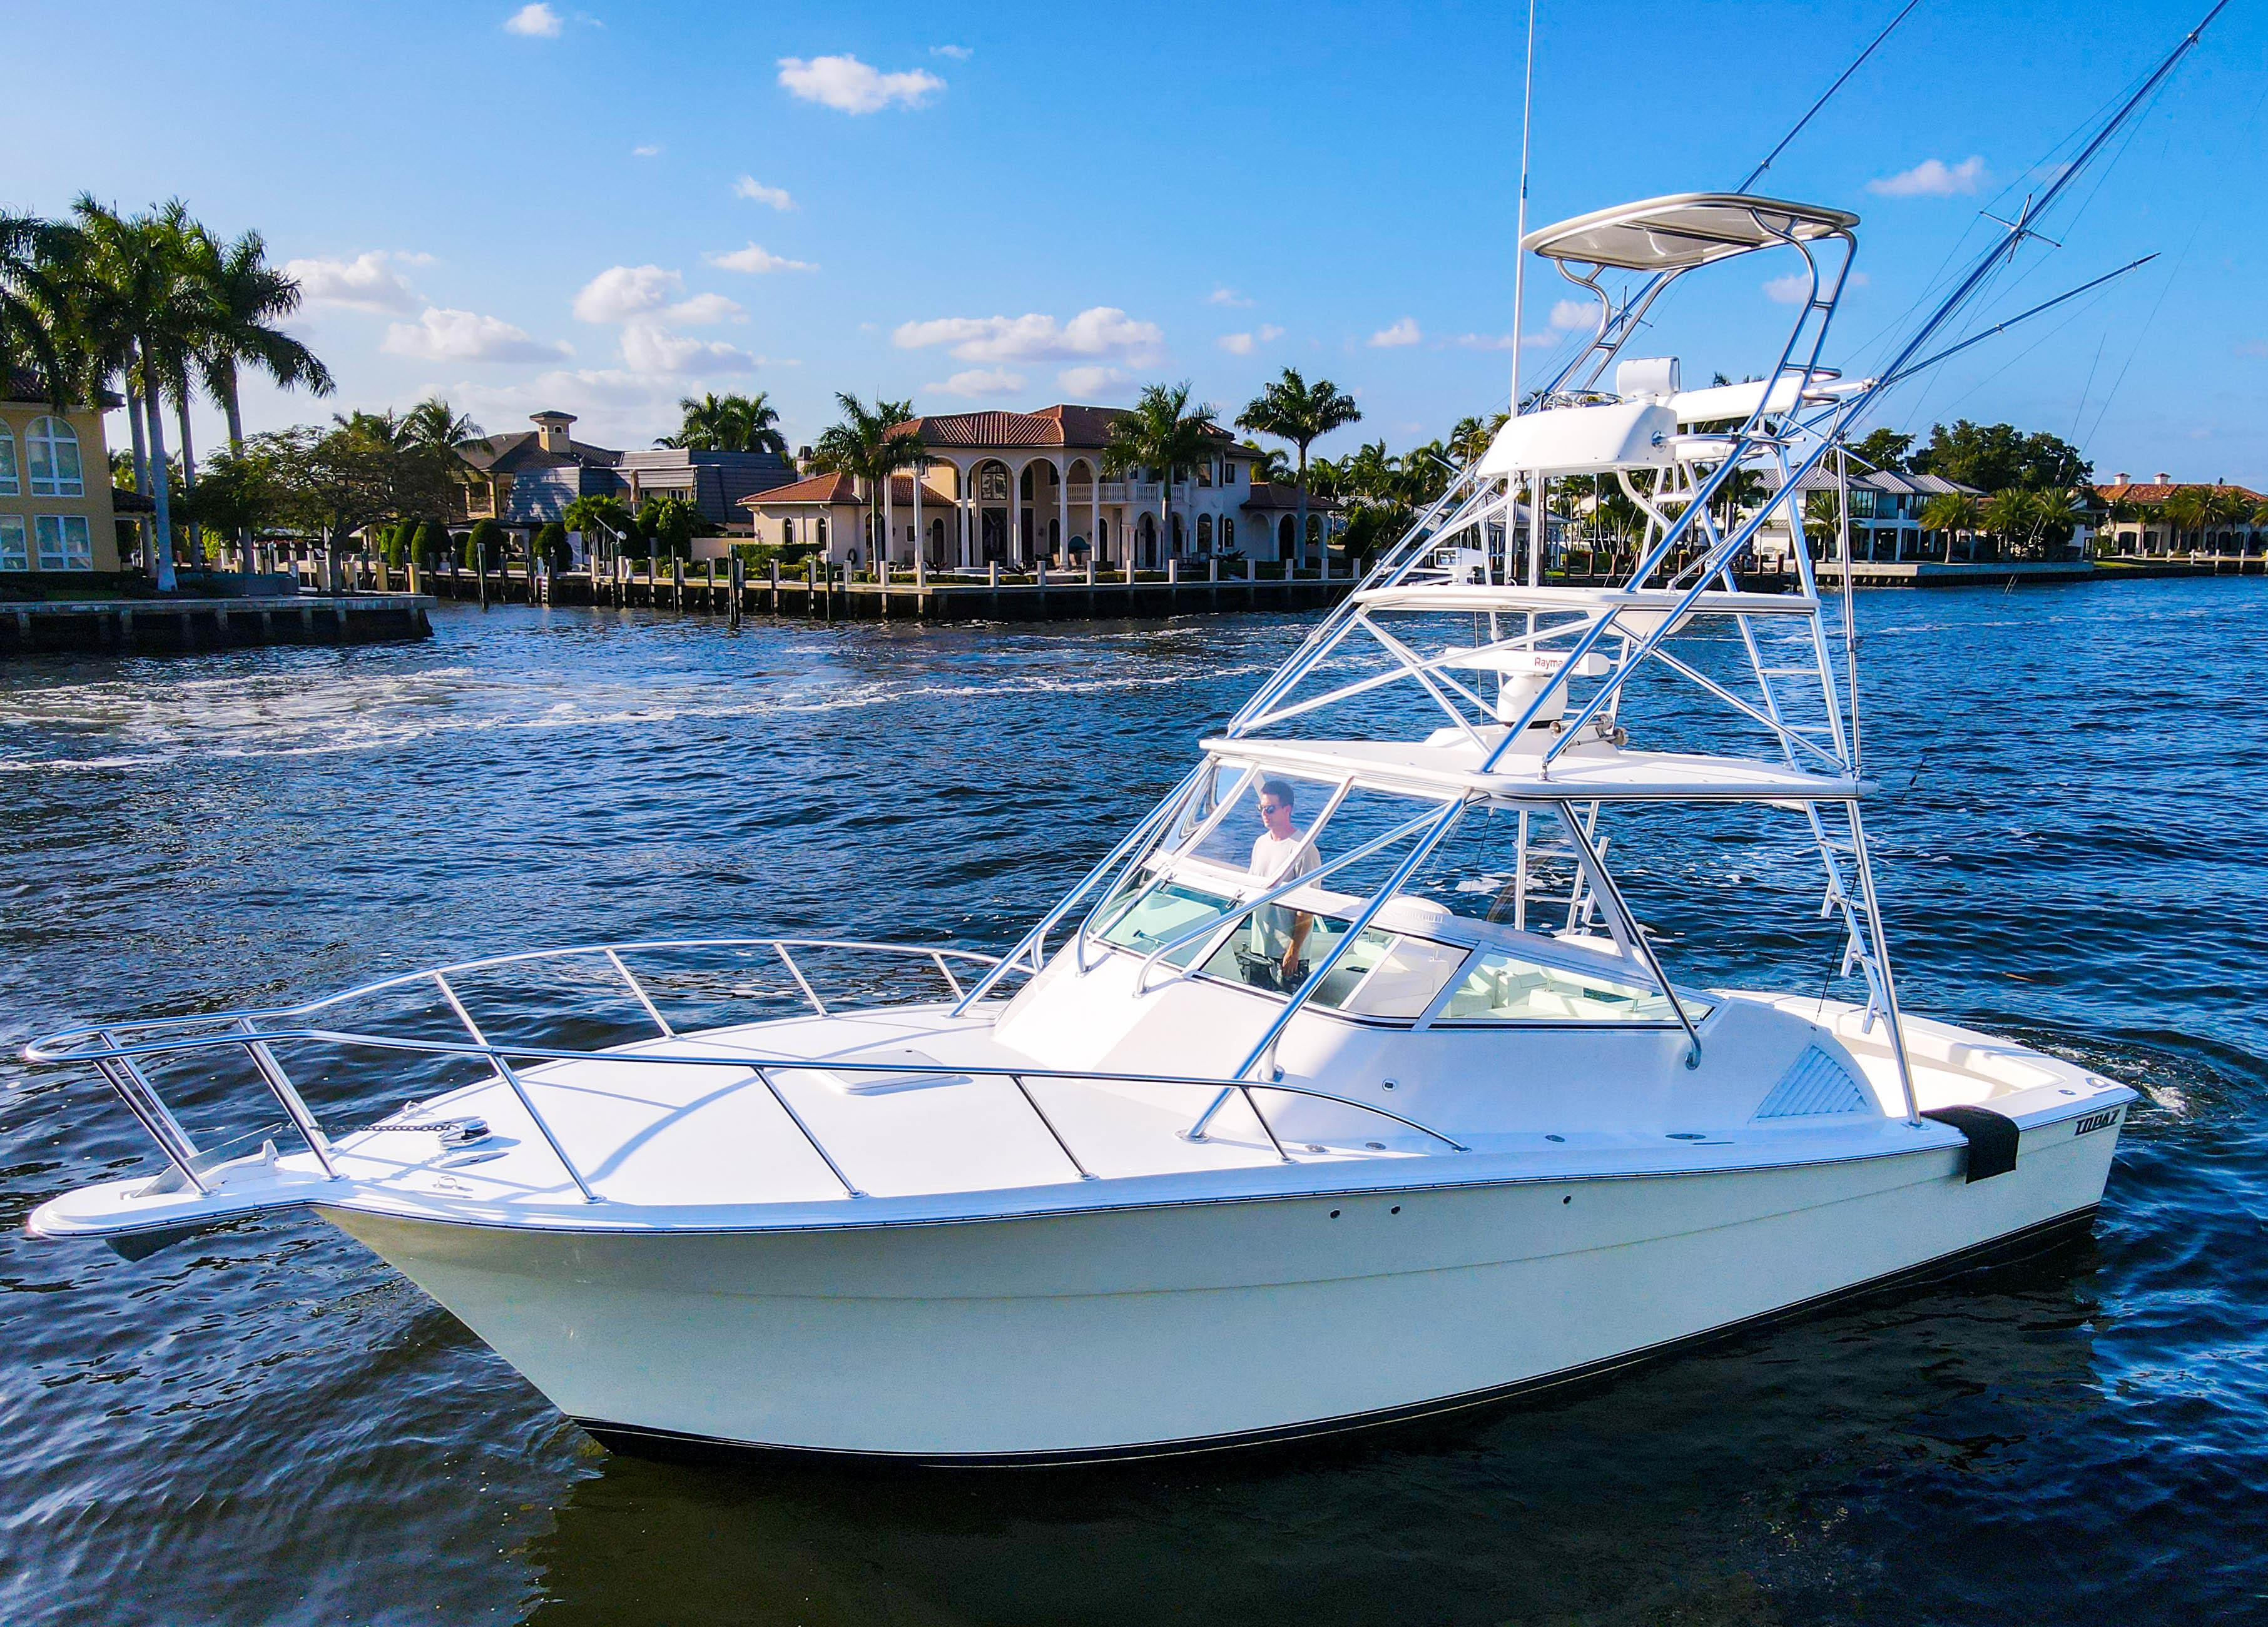 33 Topaz 2007 Rose Grey Fort Lauderdale, Florida Sold on 2022-08-18 by  Denison Yacht Sales